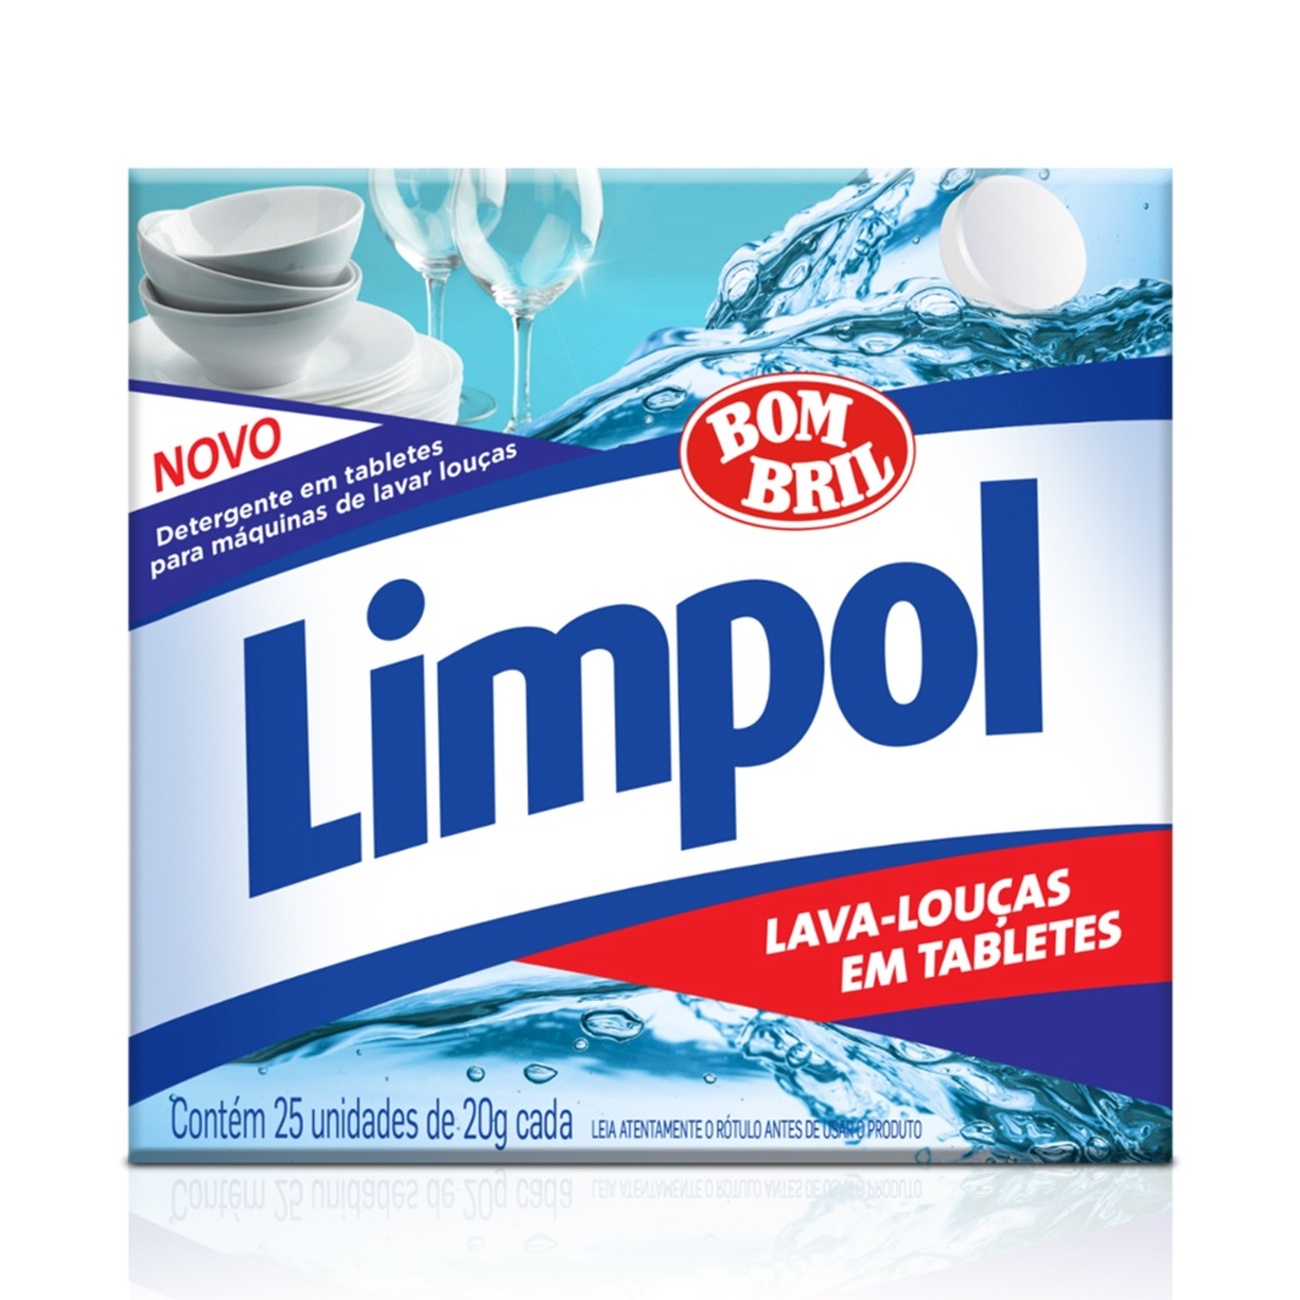 Detergente Em Tabletes Limpol Mquina De Lavar Louas 500g